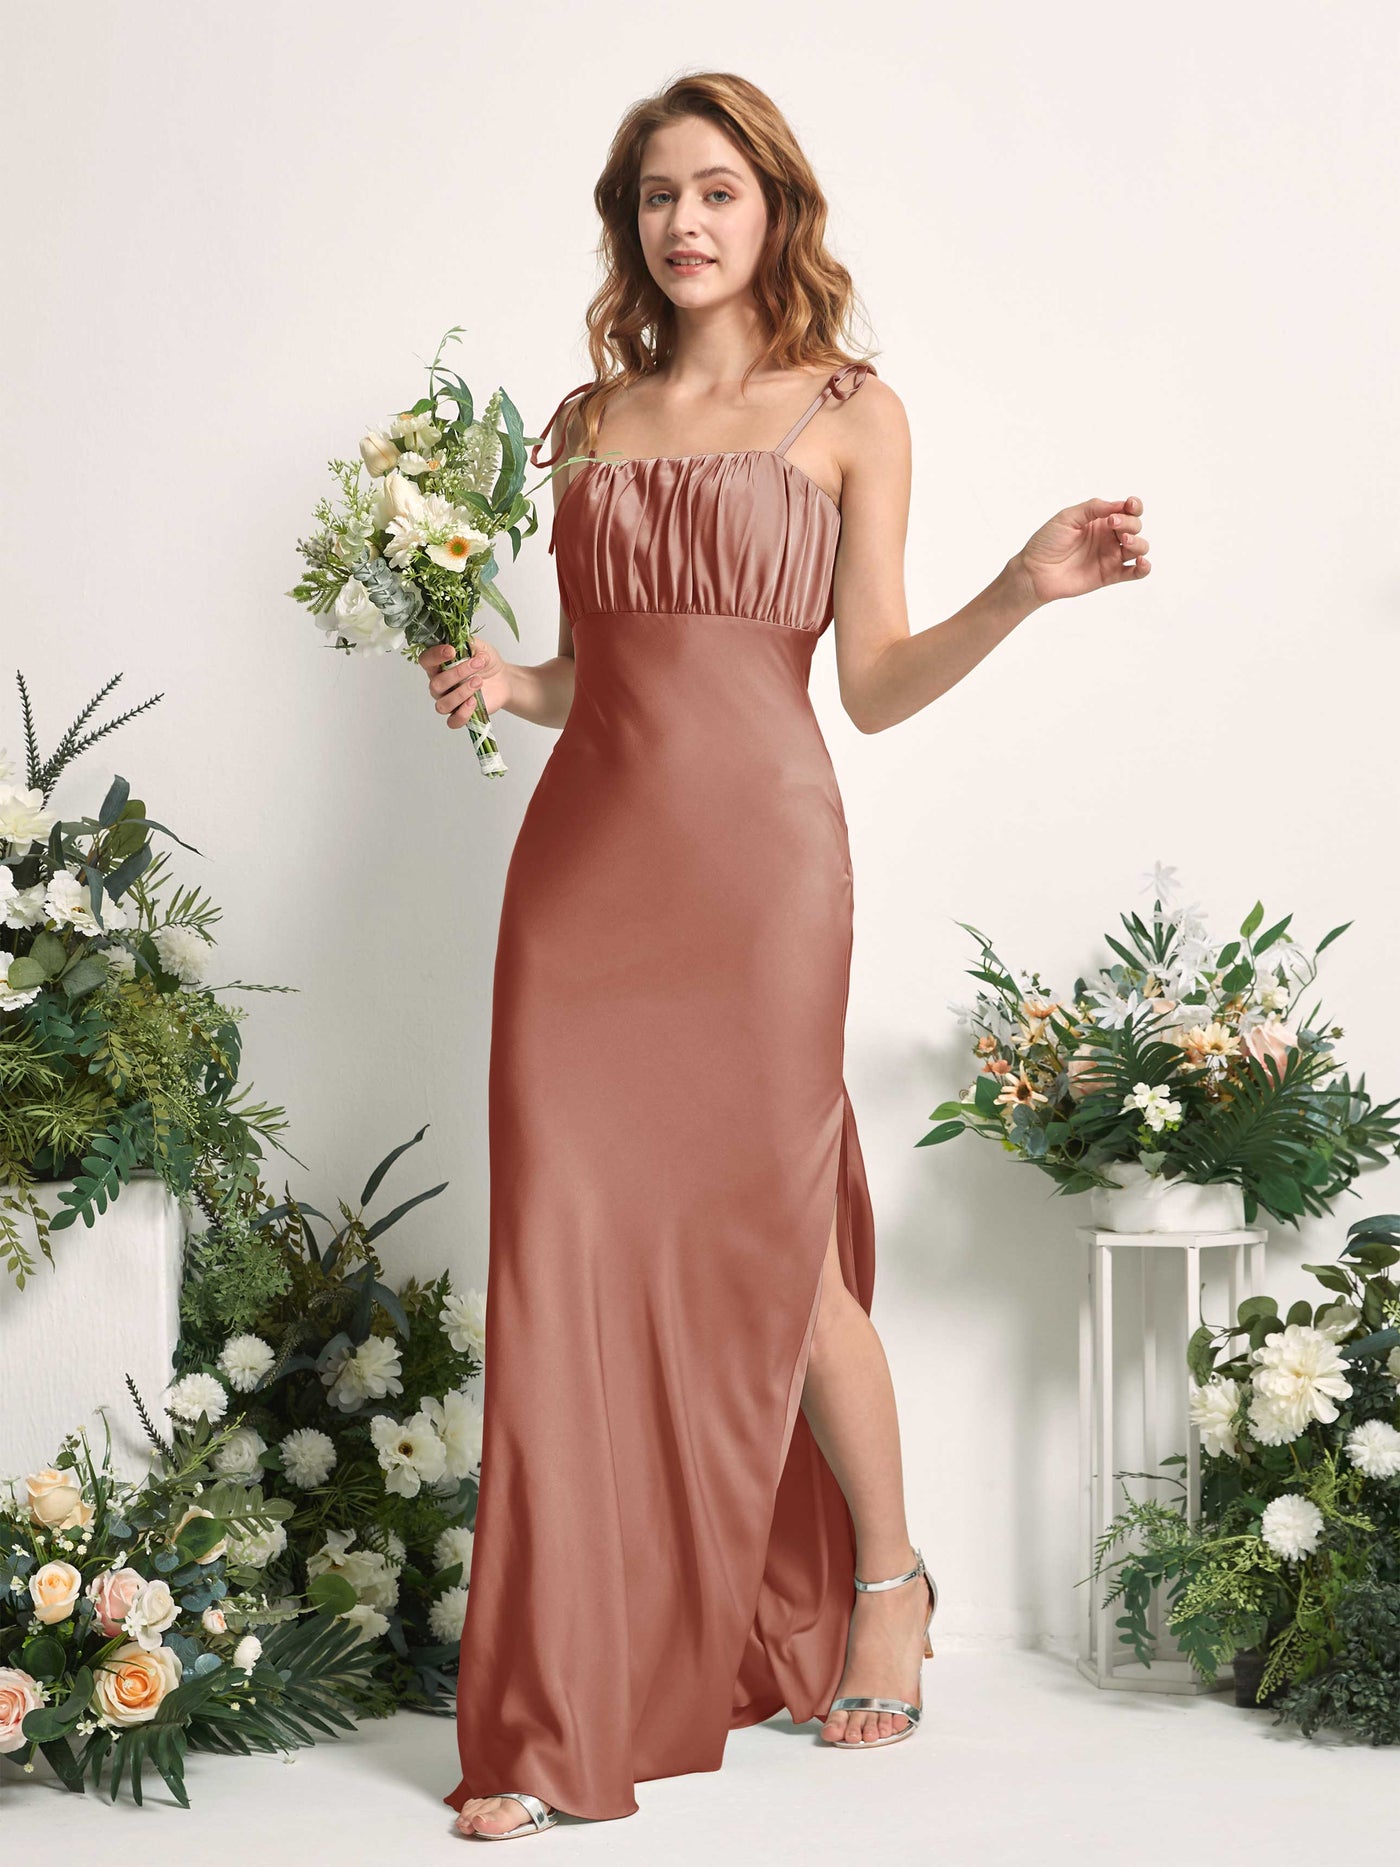 Raw Sienna Bridesmaid Dresses Bridesmaid Dress Mermaid/Trumpet Satin Spaghetti-straps Full Length Sleeveless Wedding Party Dress (80225415)#color_raw-sienna